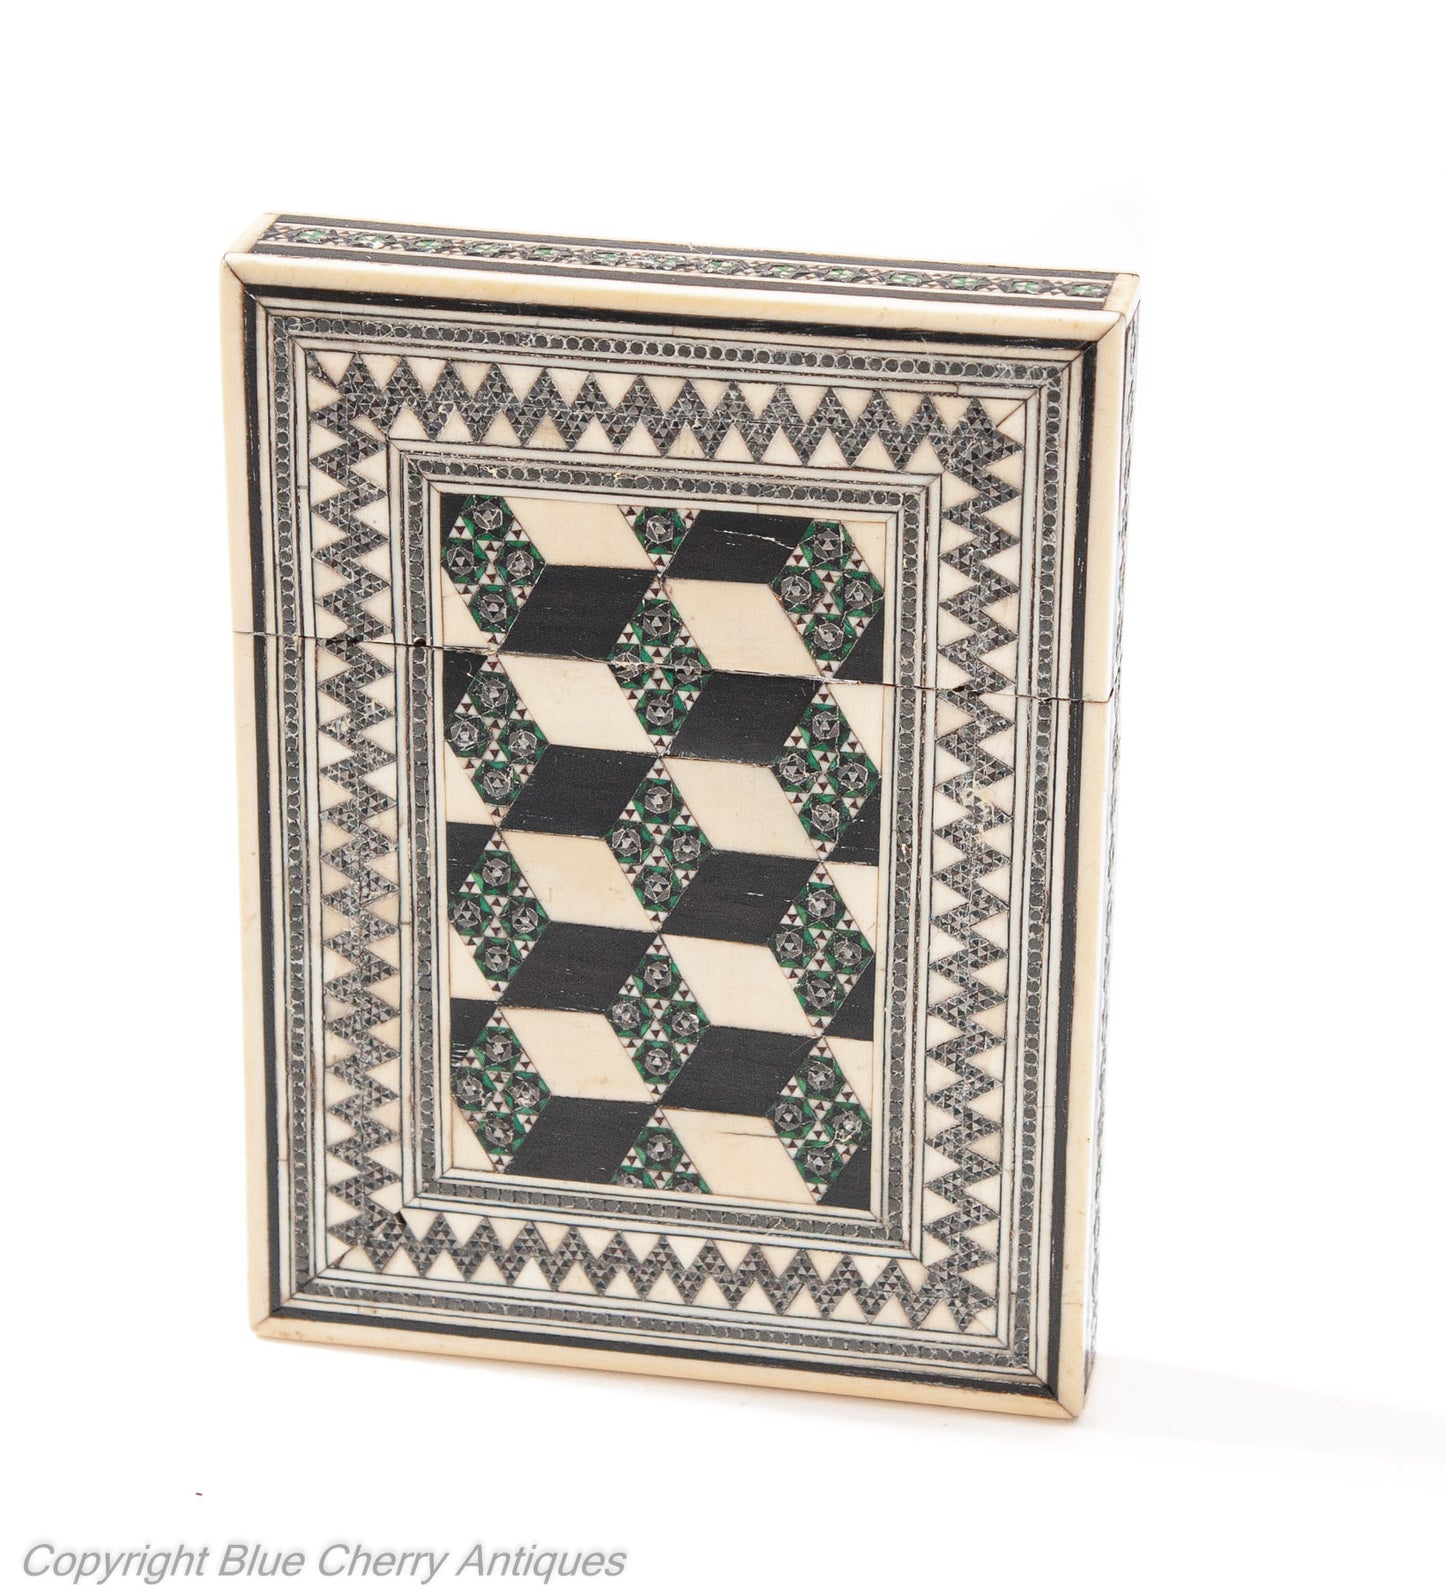 Antique Indian Vizagapatam Micro Mosaic and Sandalwood Card Case c1860 (Code 1937)